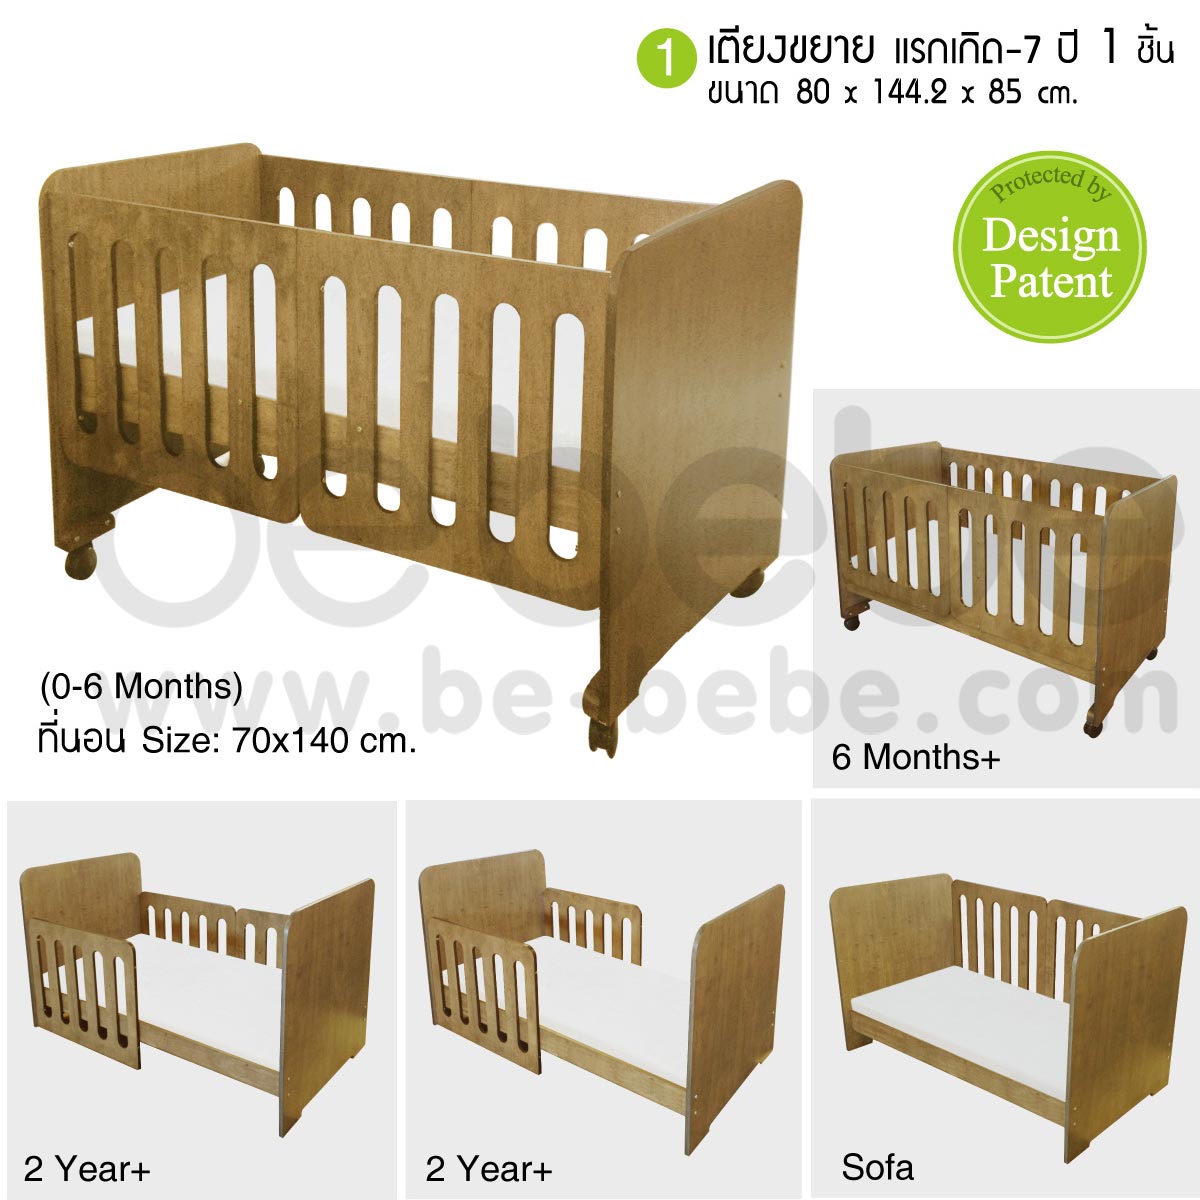 be bebe :ชุดเตียงเด็กแรกเกิด-7ปี (70x140)ปรับเป็นโซฟาได้+ที่นอนฟองน้ำ+ชุดเครื่องนอน+ตู้เสื้อผ้า+ตู้เตี้ย /น้ำตาลอ่อน